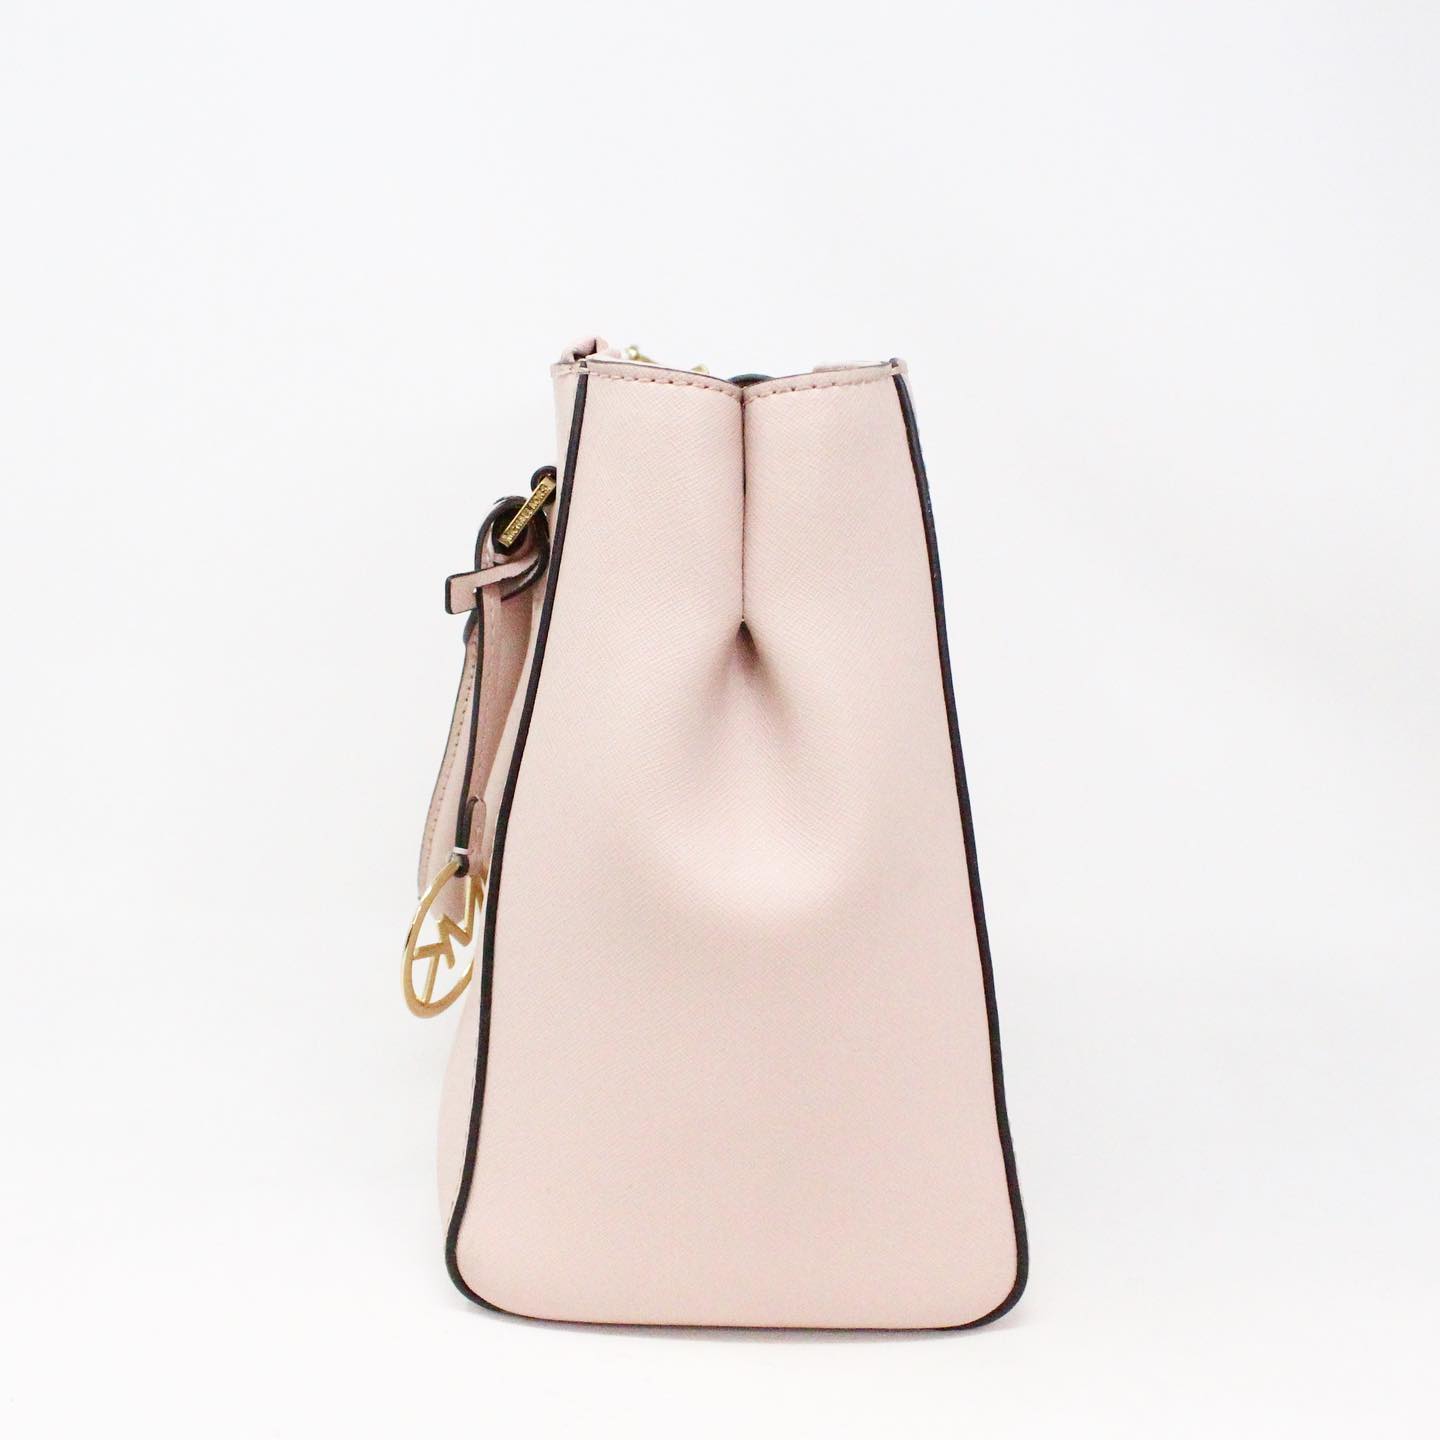 ON SALE* MICHAEL KORS #36063 Blush Pink Saffiano Leather Handbag